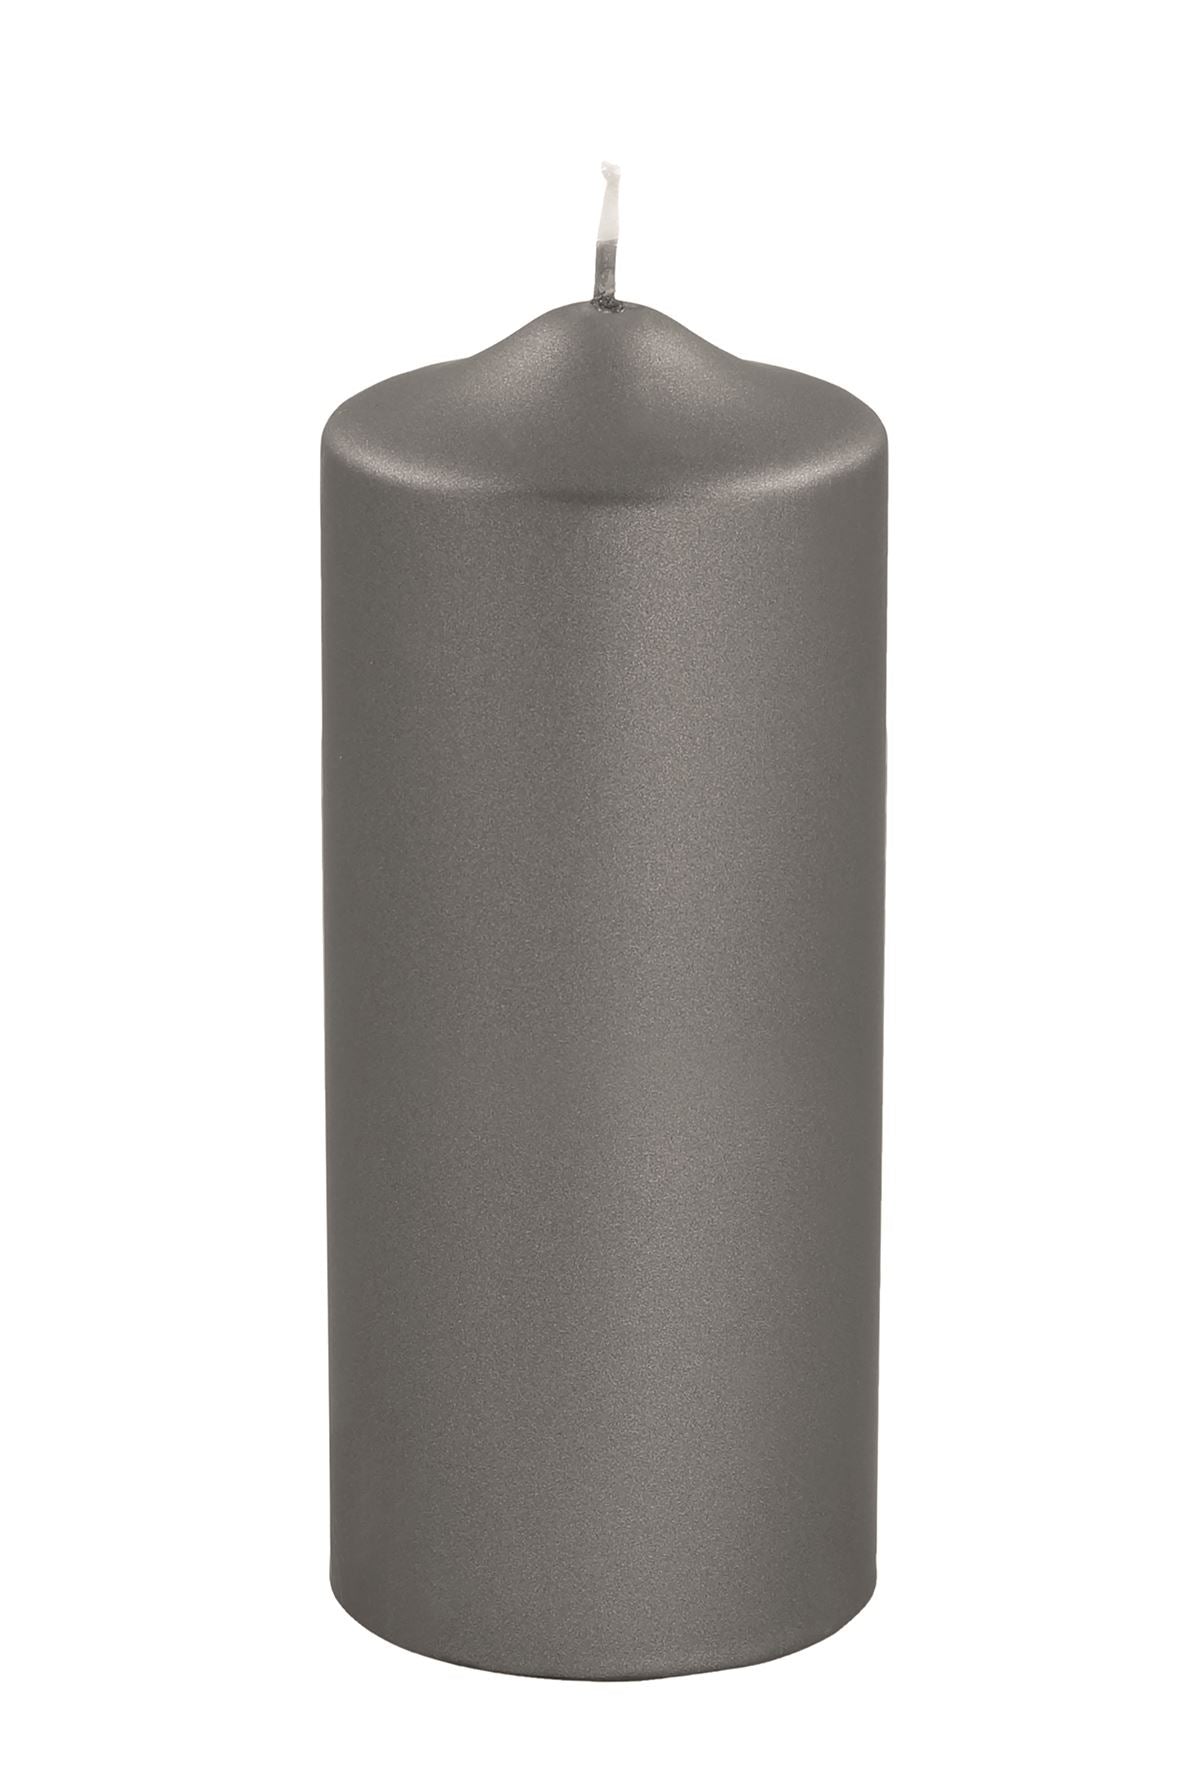 Fink metallic Stumpenkerze Candle grau Paraffin Höhe 20 cm